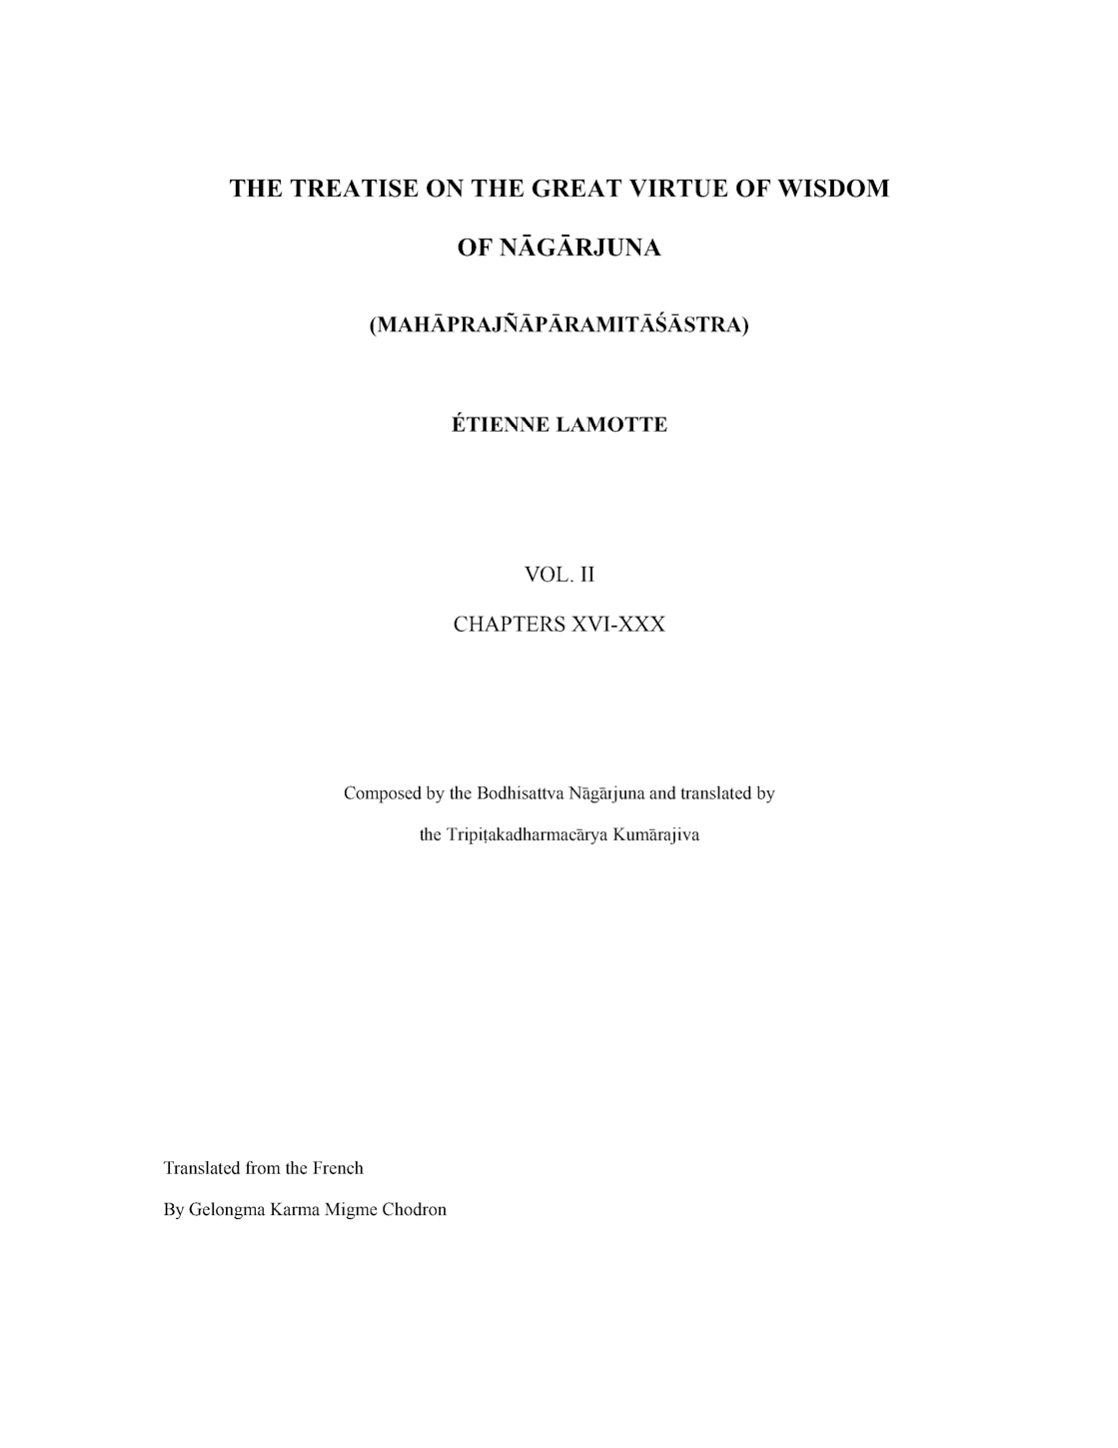 The Treatise on the Great Virtue of Wisdom of Nāgārjuna (Mahāprajñāpāramitāśāstra) Vol. 2 Chodron 2001-front.jpg